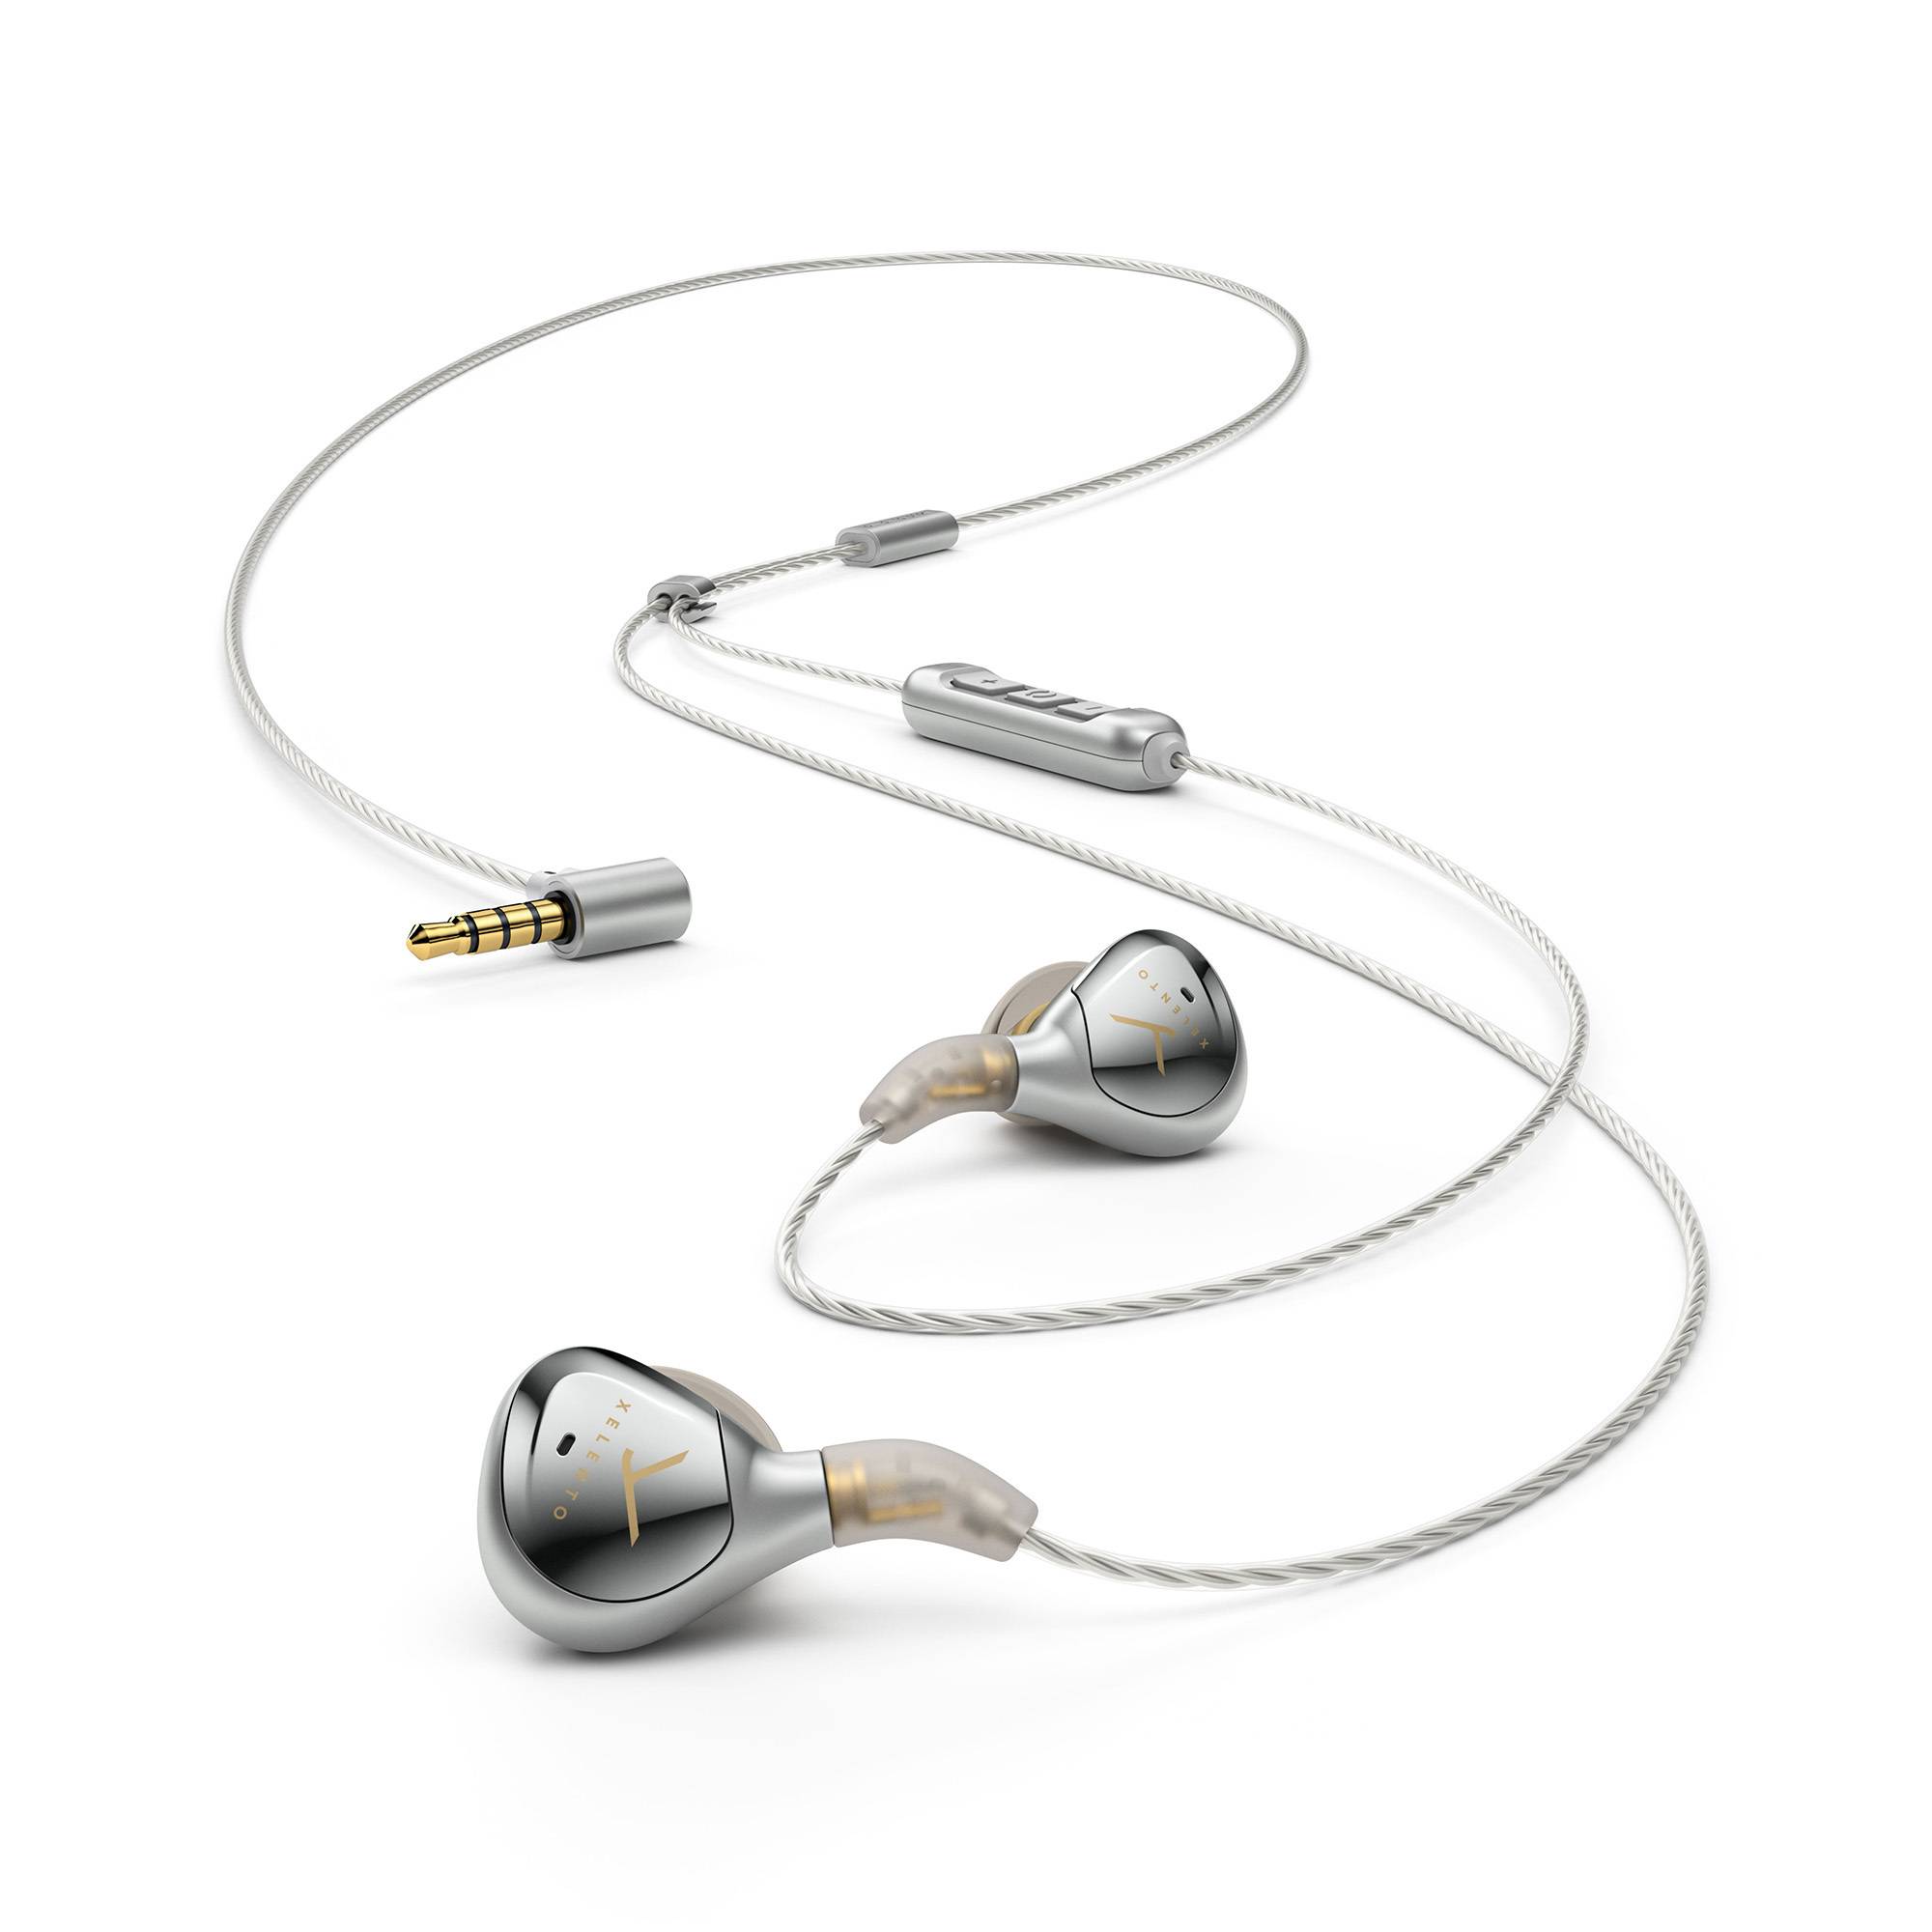 Xelento Remote Audiophile In-Ear Headphones (2nd Generation)